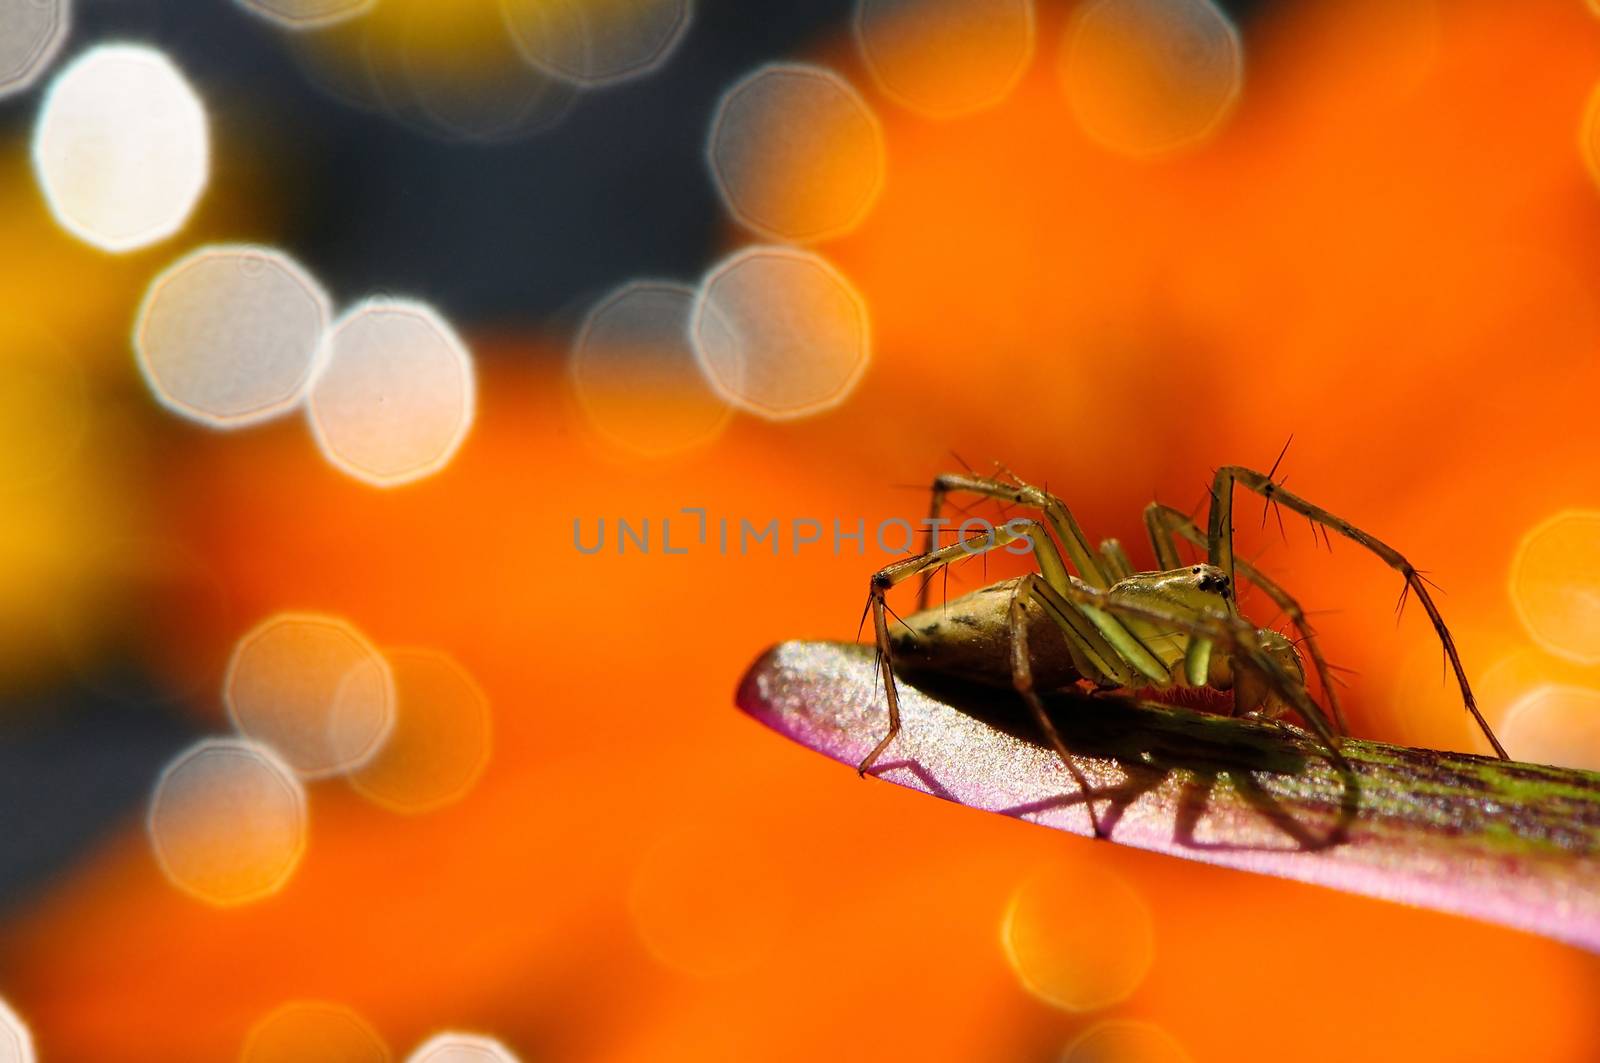 beautiful spider on orange background by panuruangjan